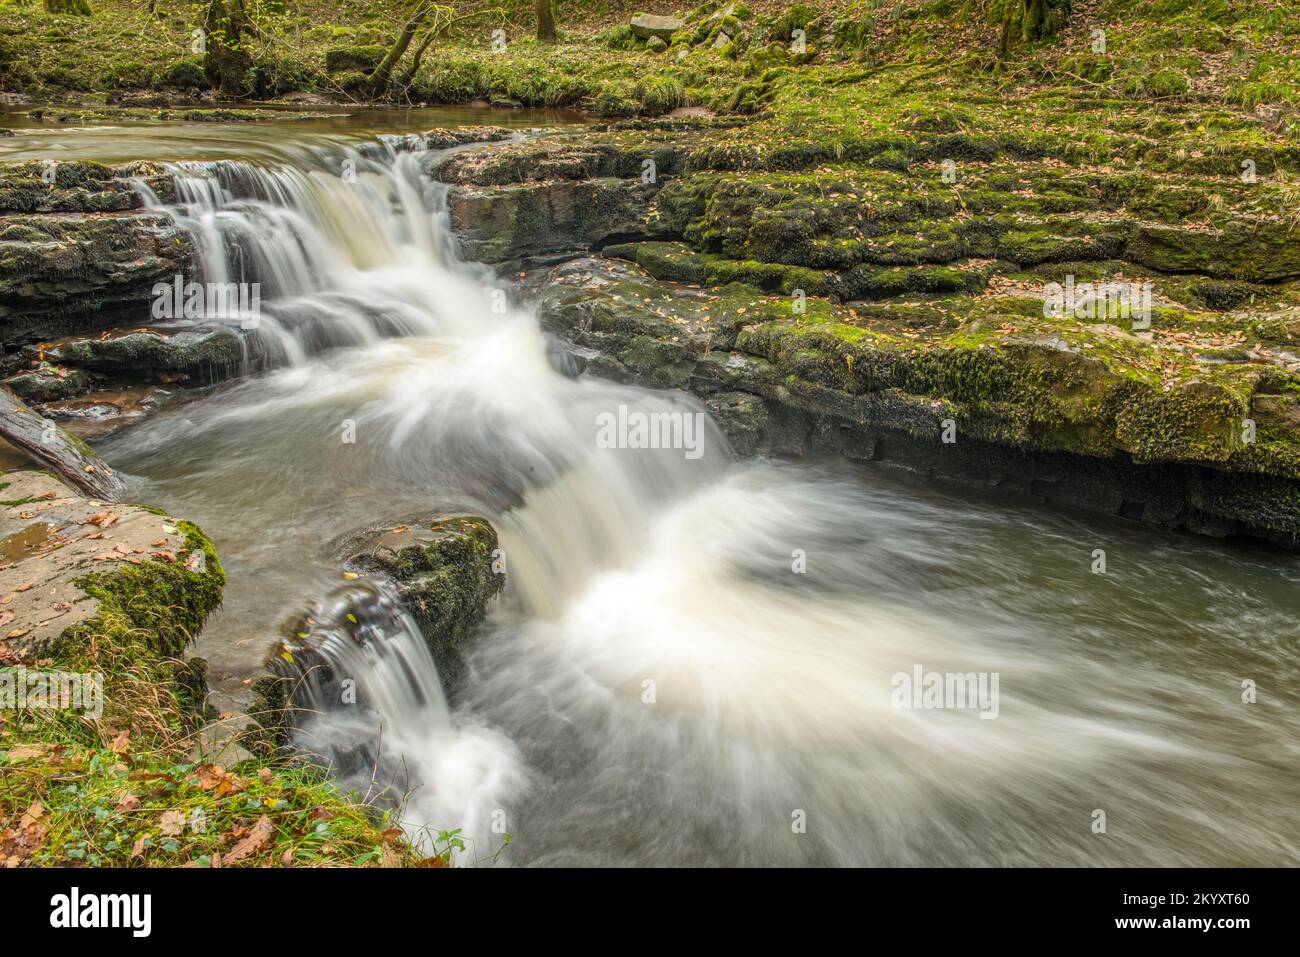 Namenloser Wasserfall unter Pont Melin Fach am Fluss Neath oder in Walisisch, der Afon Nedd. Stockfoto